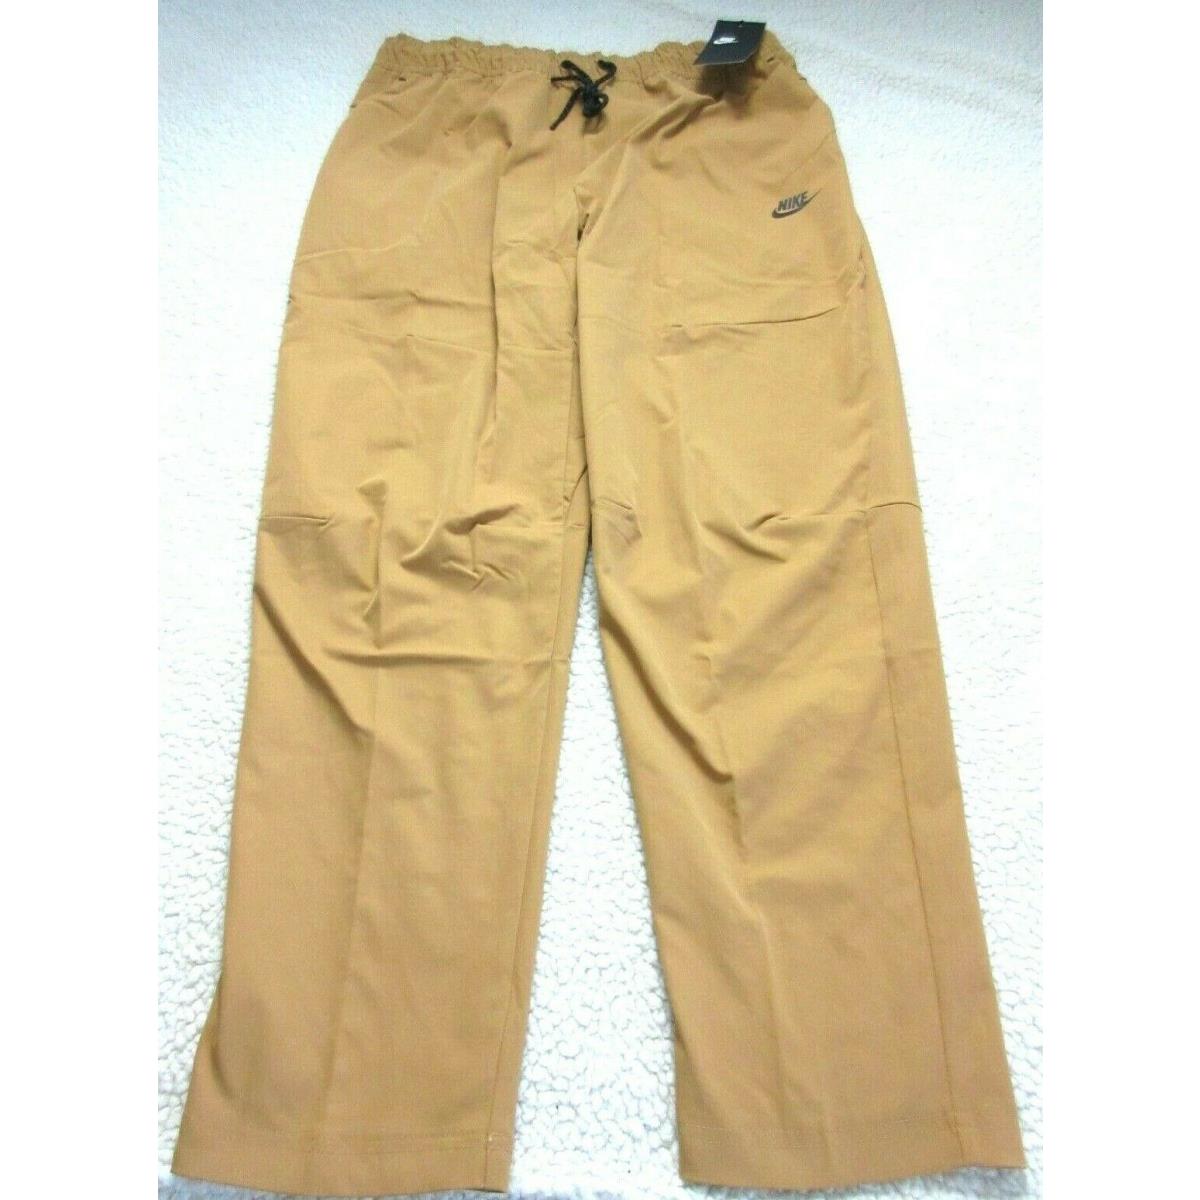 Nike clothing Sportswear Pants - Brown/Black , Flax/Black Manufacturer 1